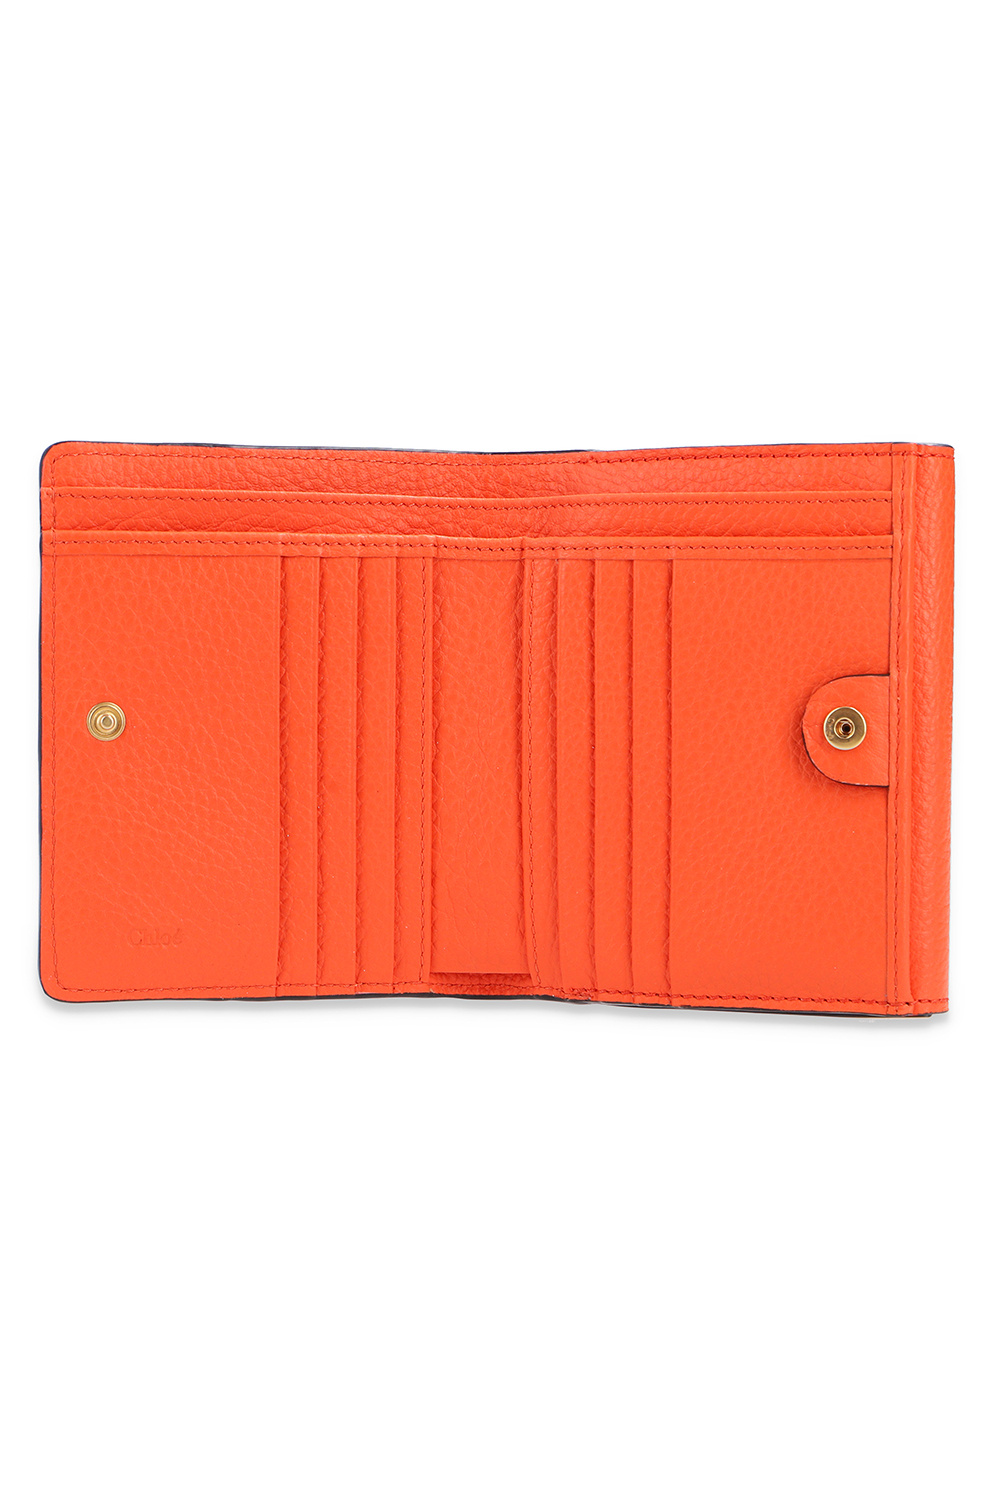 Chloé ‘Marcie’ logo-embossed wallet | Women's Accessories | Vitkac